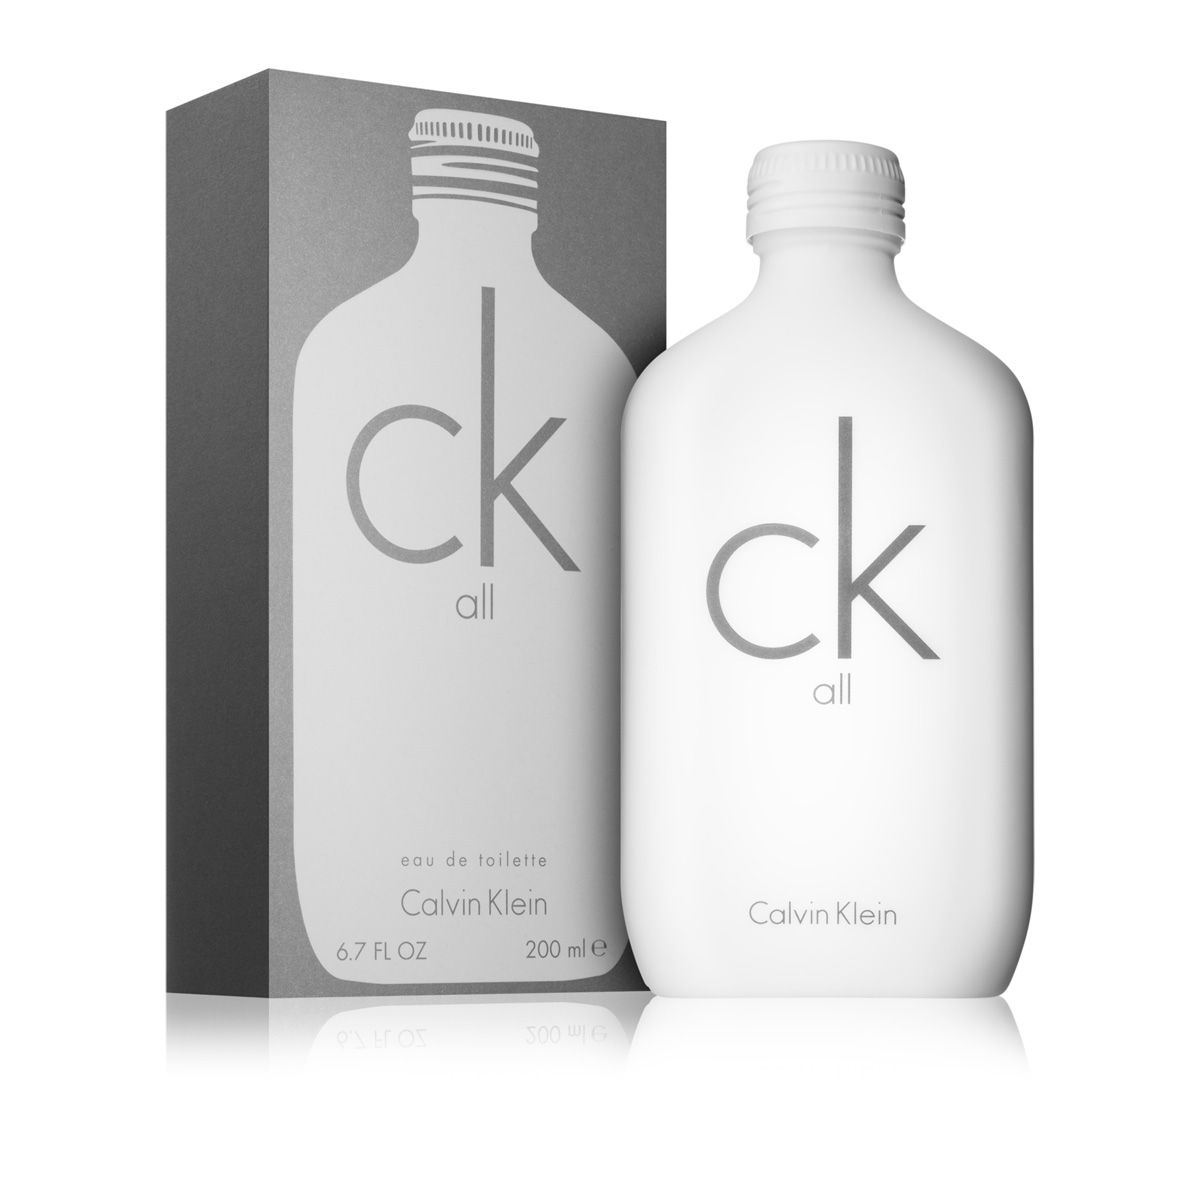 Calvin Klein CK All - EDT 100ml – Nước Hoa Chính Hãng - Authentic